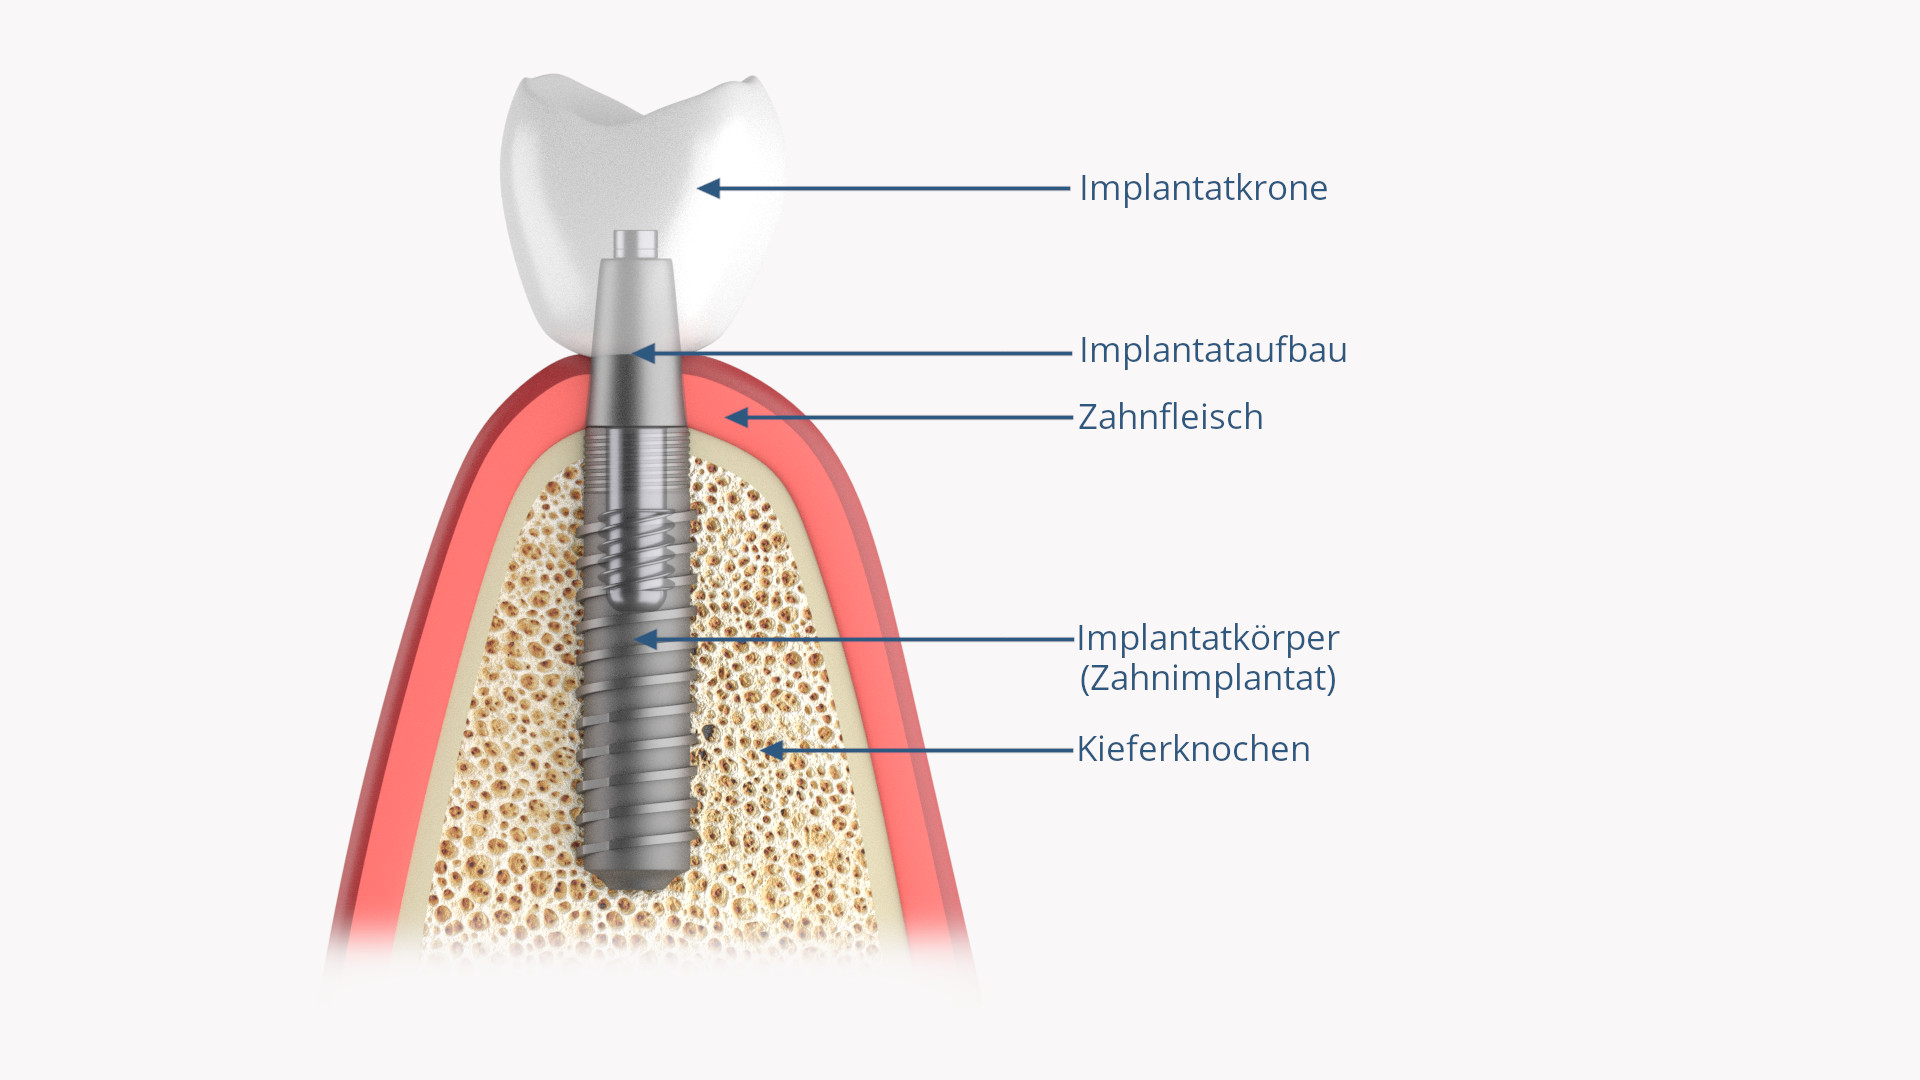 Zahnimplantat implantiert